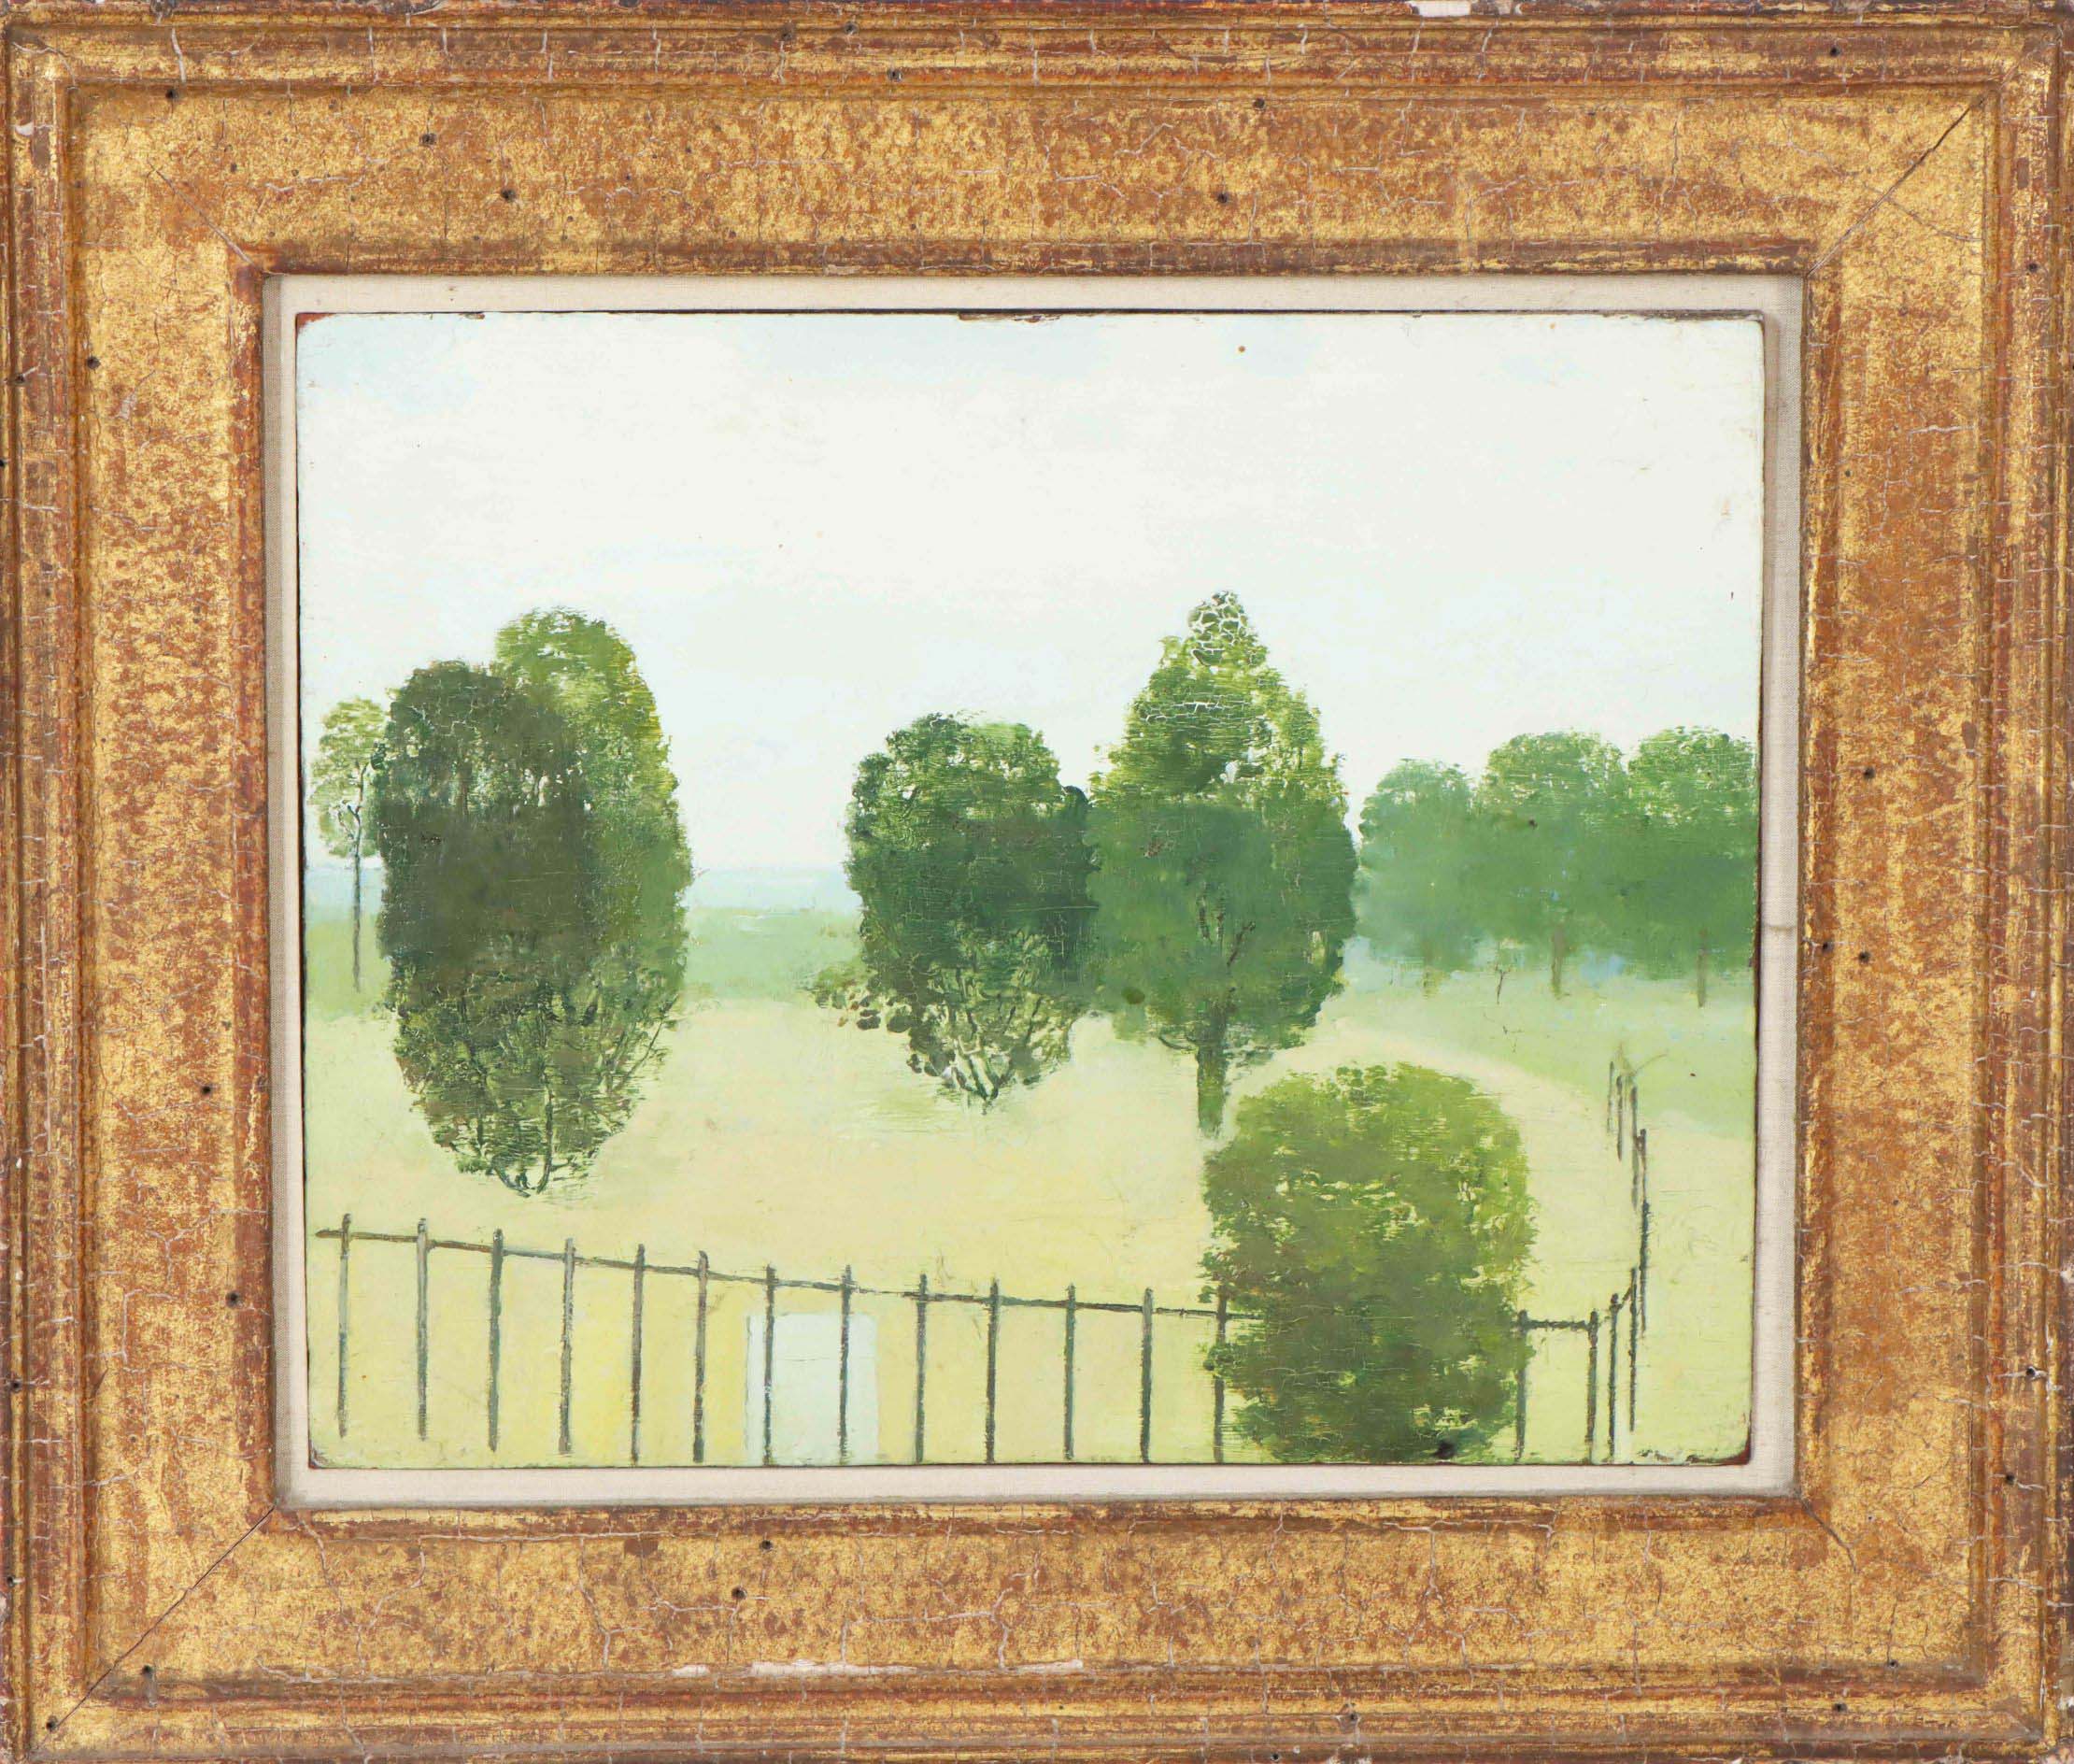 Albert York, ‘Trees and Fence,’ est. $80,000-$120,000